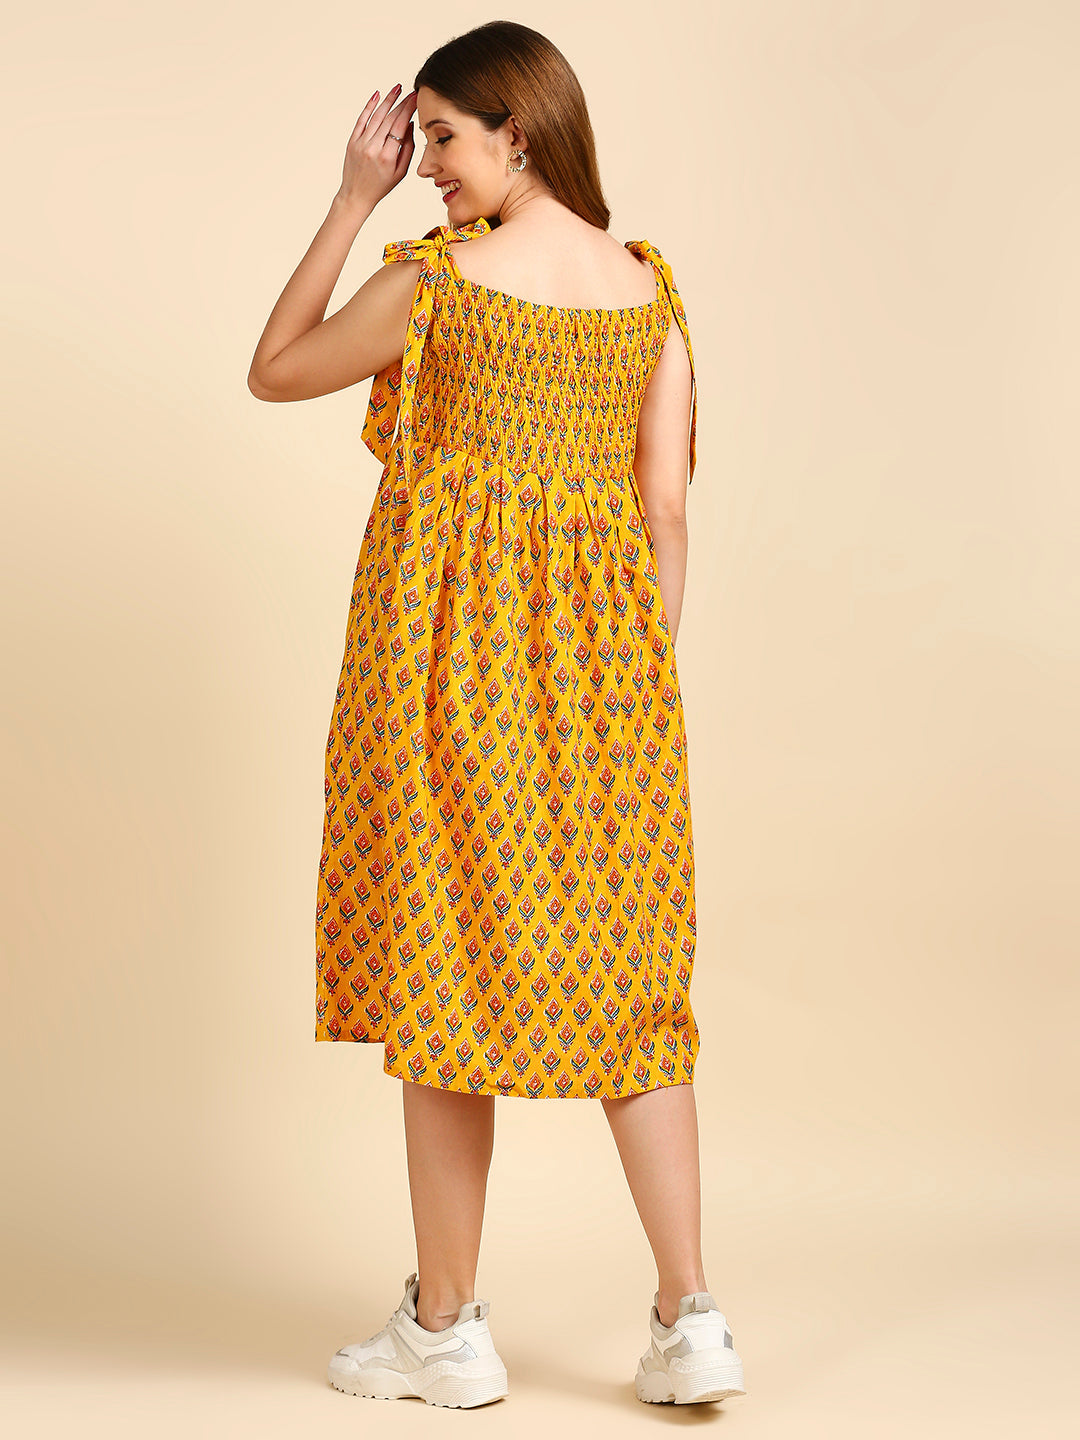 Women's's Yellow Ethnic Motifs Empire Midi Dress